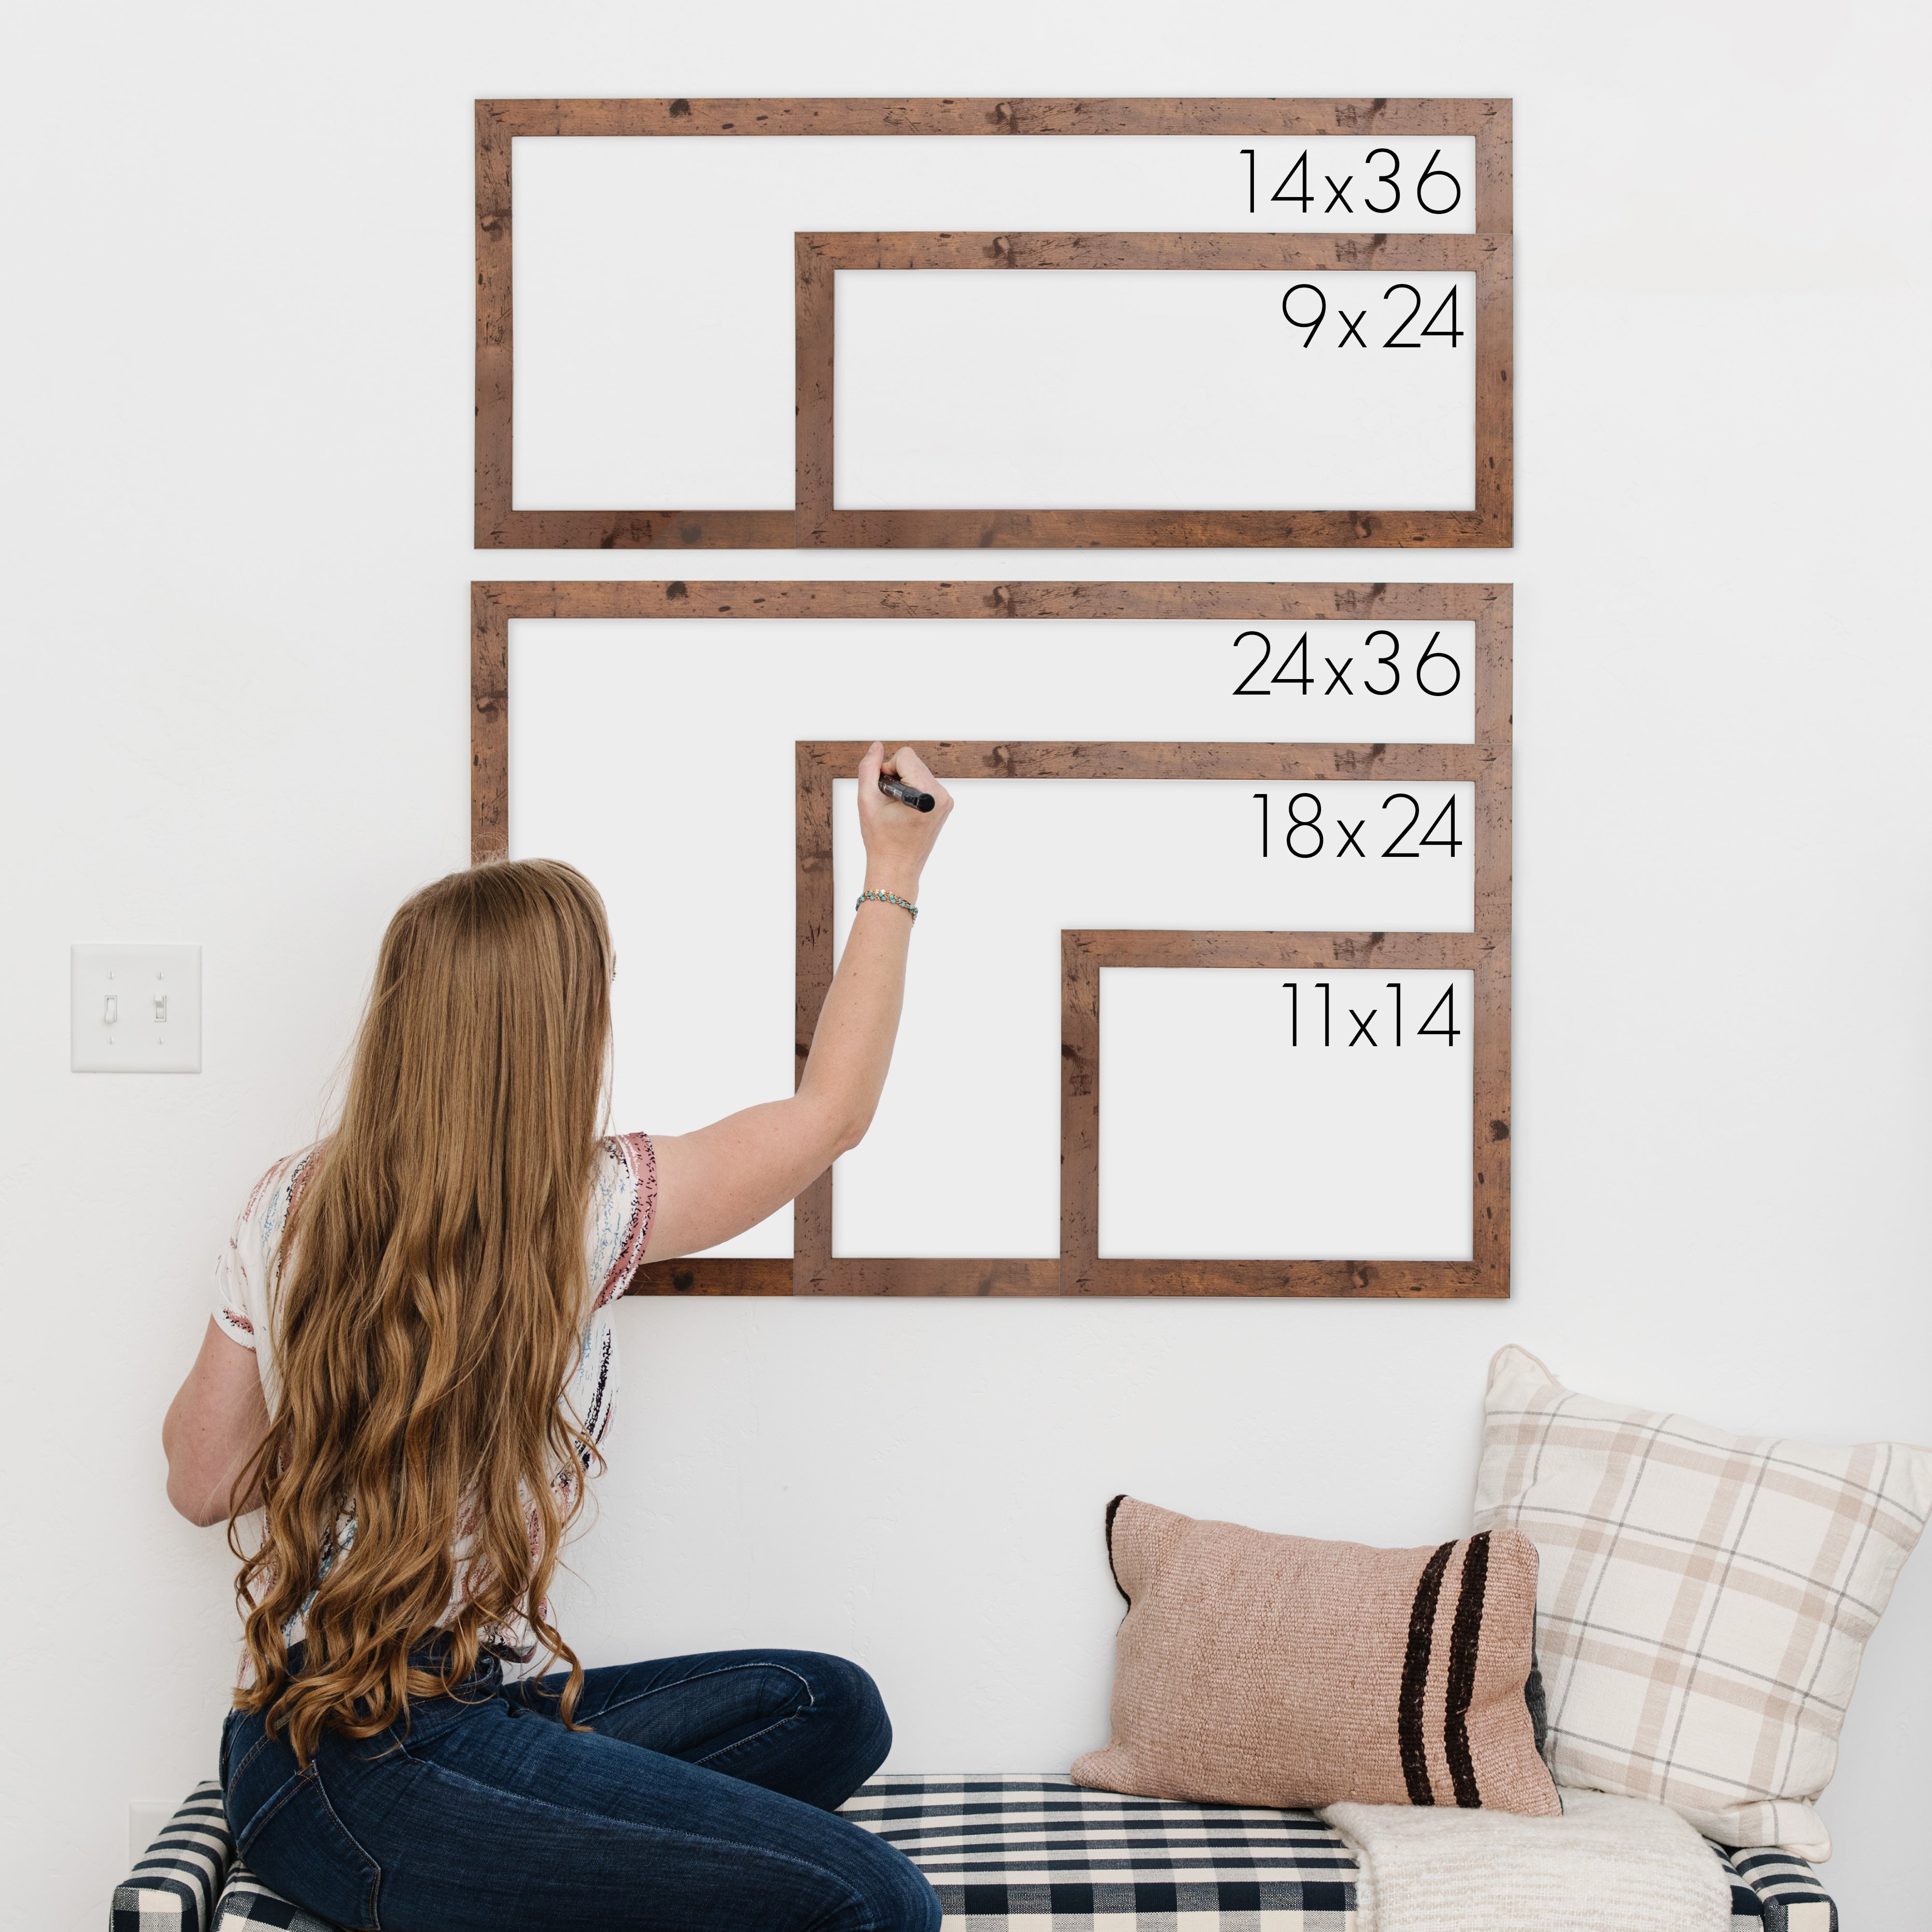 Week & Month Combo Framed Whiteboard + 6 sections | Horizontal Pennington